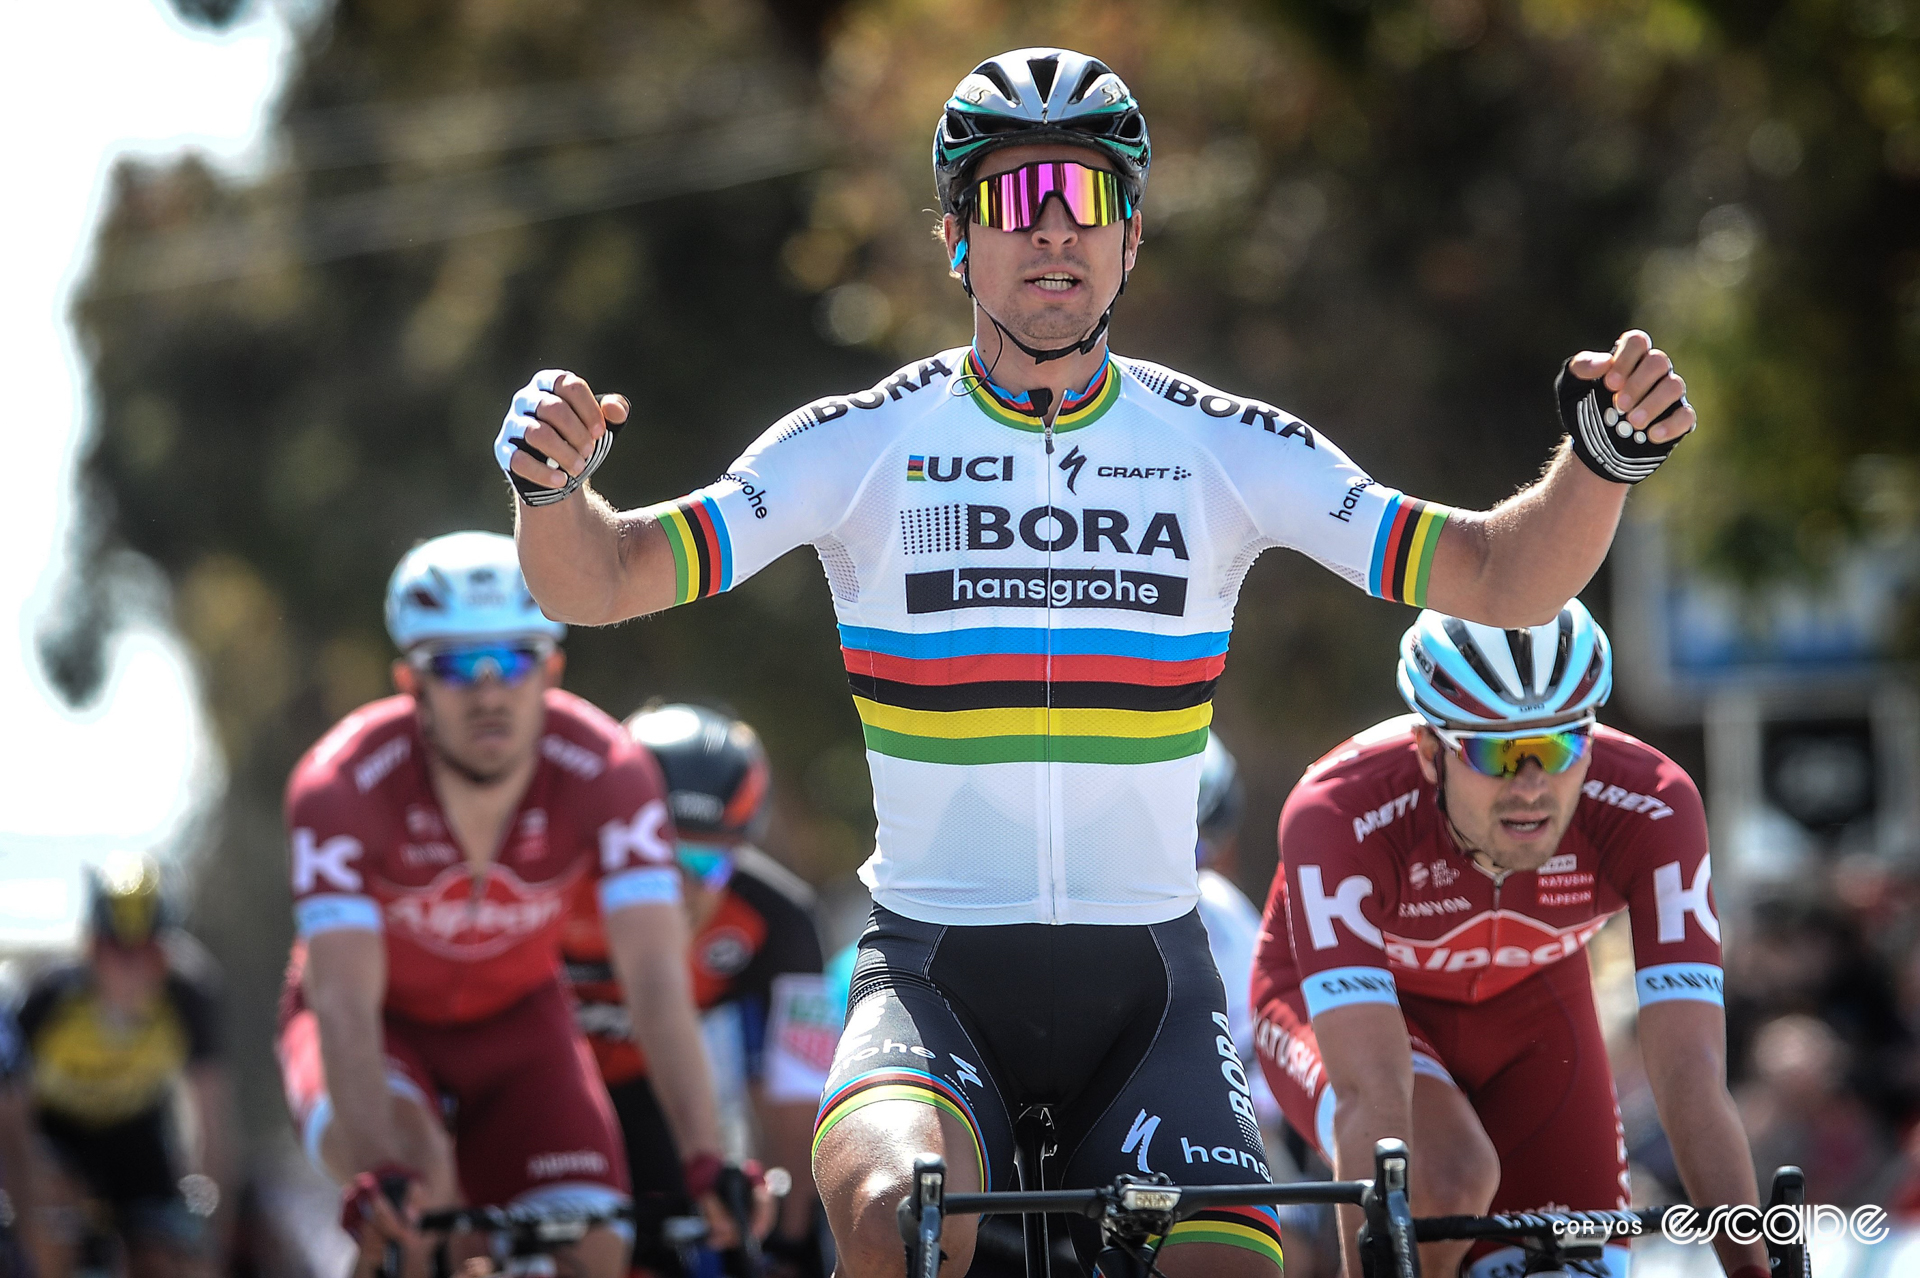 Peter Sagan celebrates winning a stage at the 2017 Tour of California.